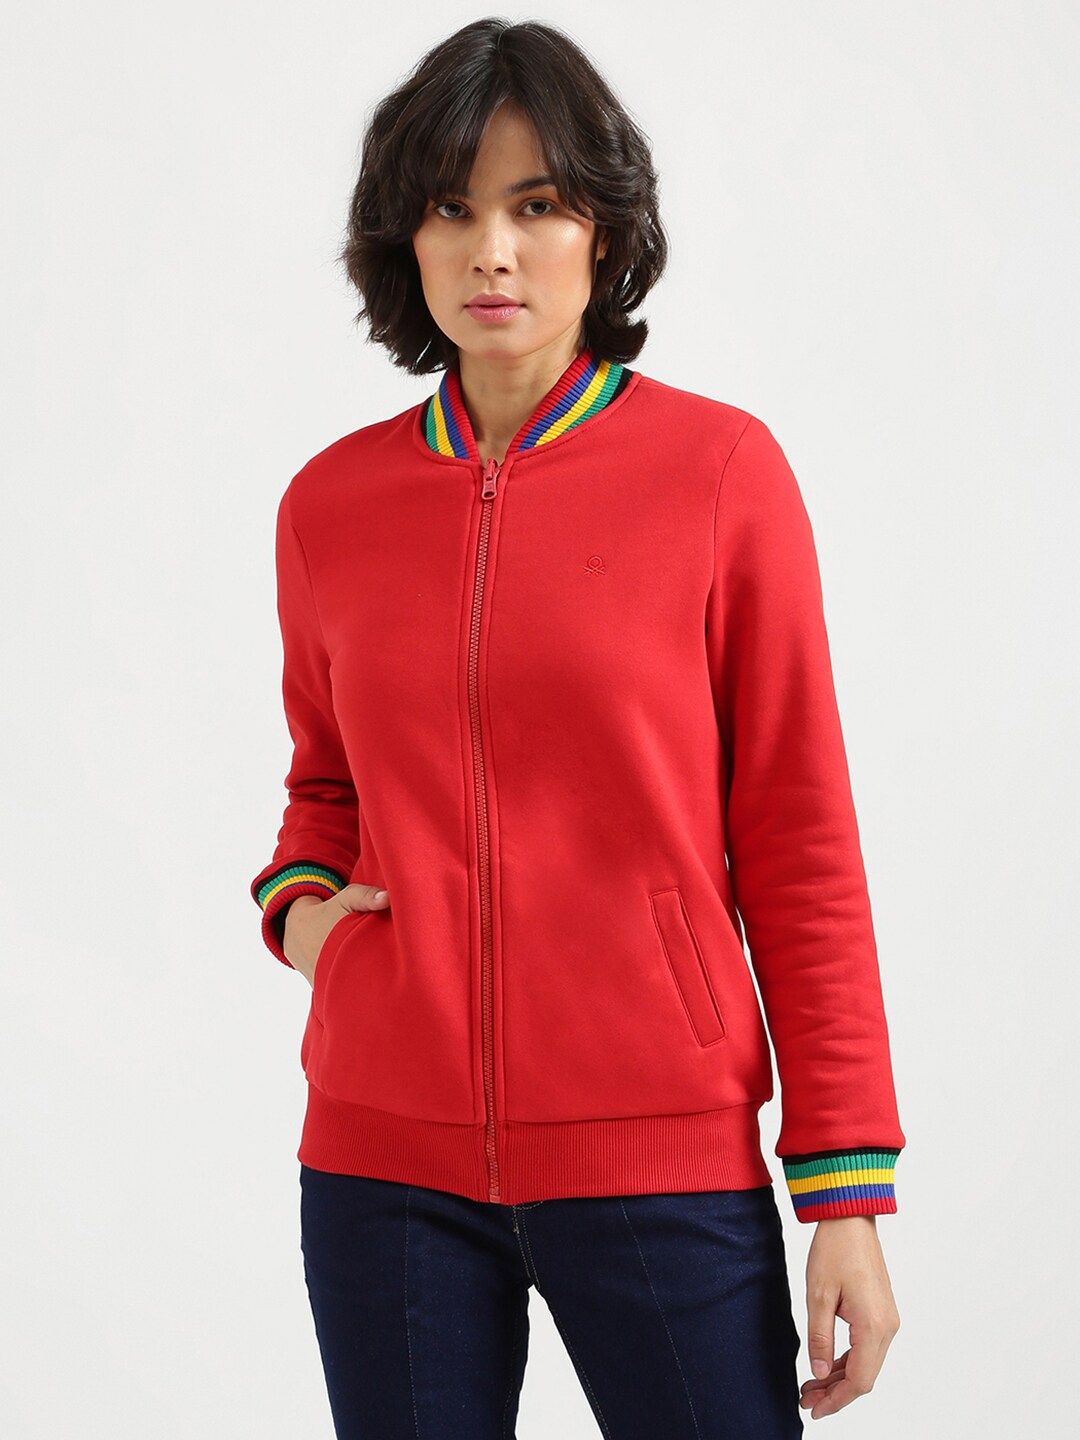 United Colors of Benetton Women Red Regular Sweatshirt Price in India